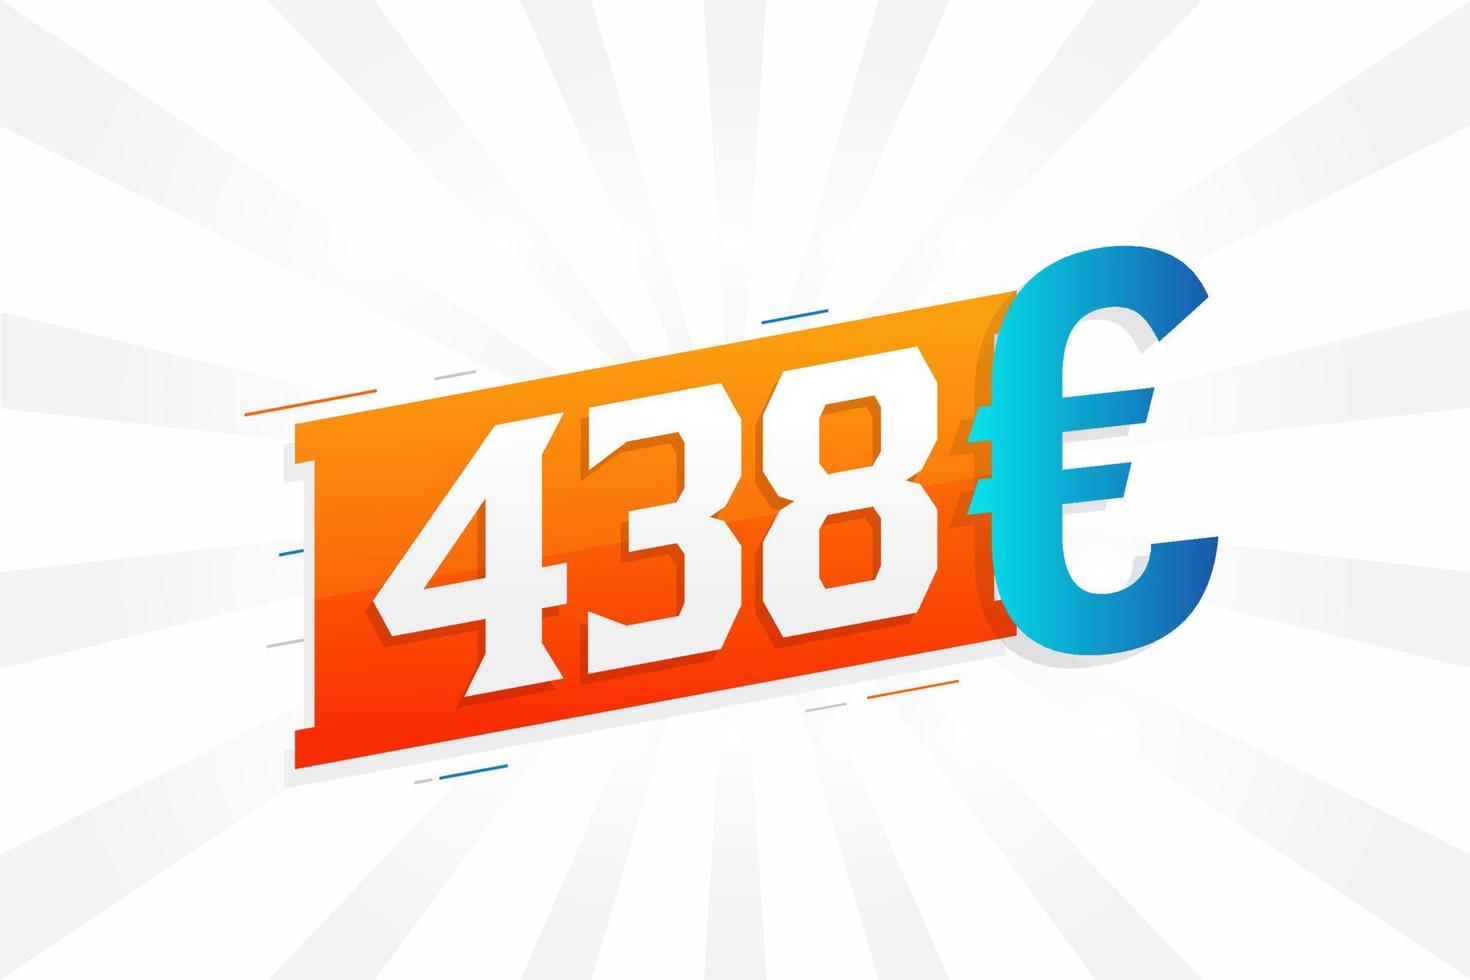 Símbolo de texto vectorial de moneda de 438 euros. 438 euro vector de stock de dinero de la unión europea